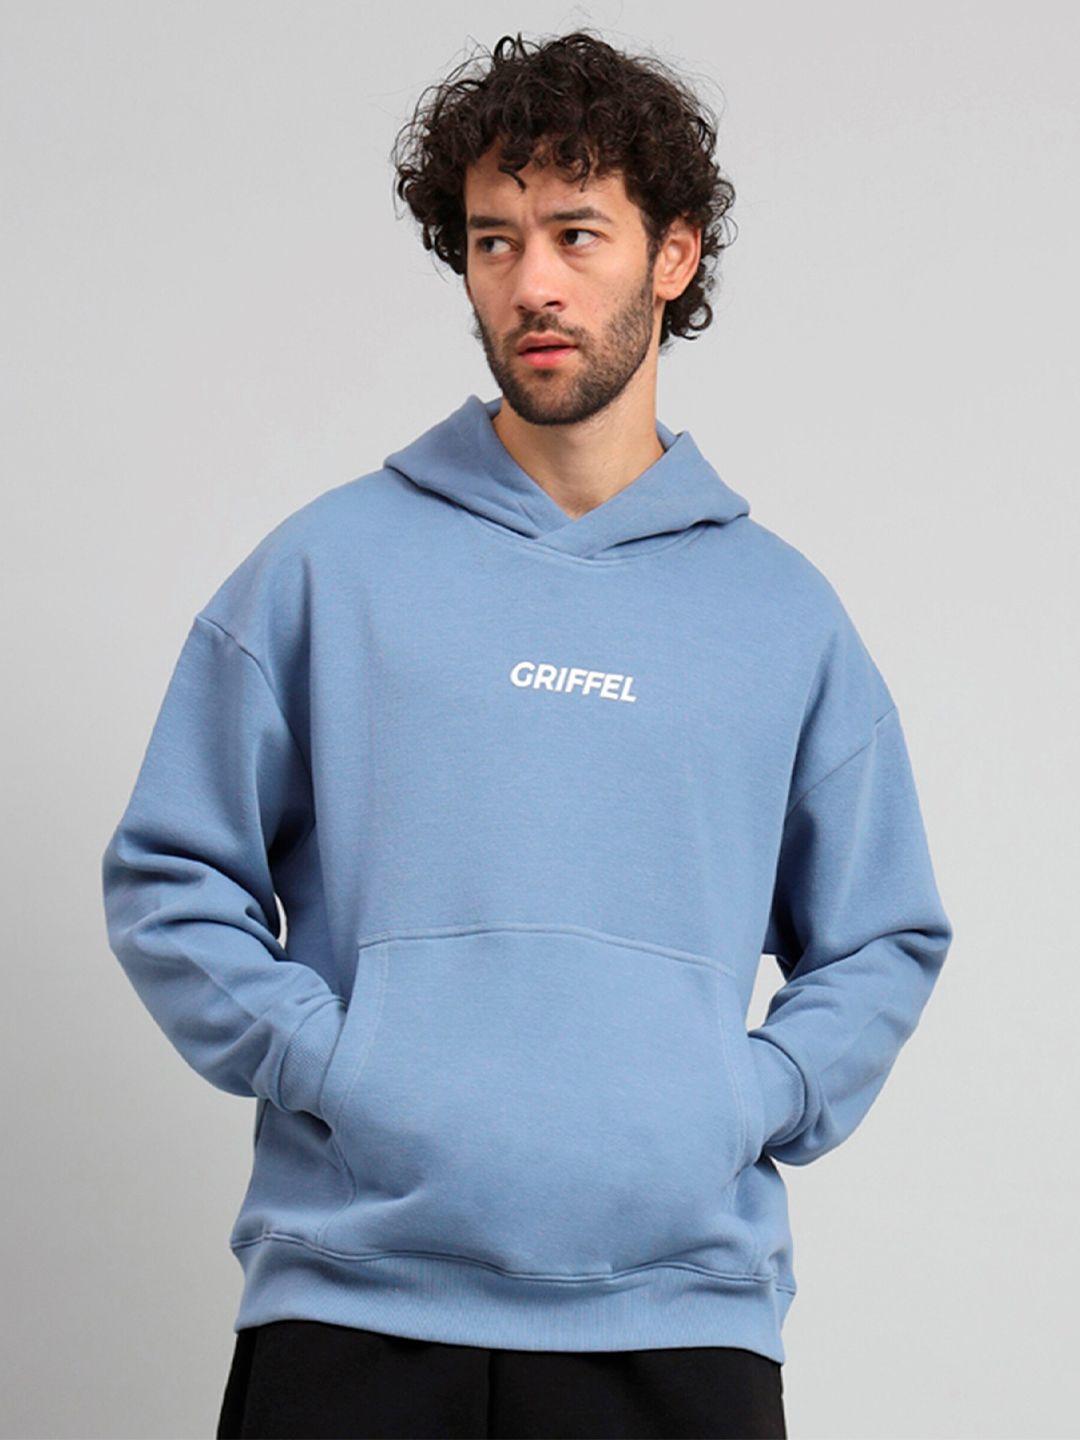 griffel-fleece-hooded-pullover-sweatshirt